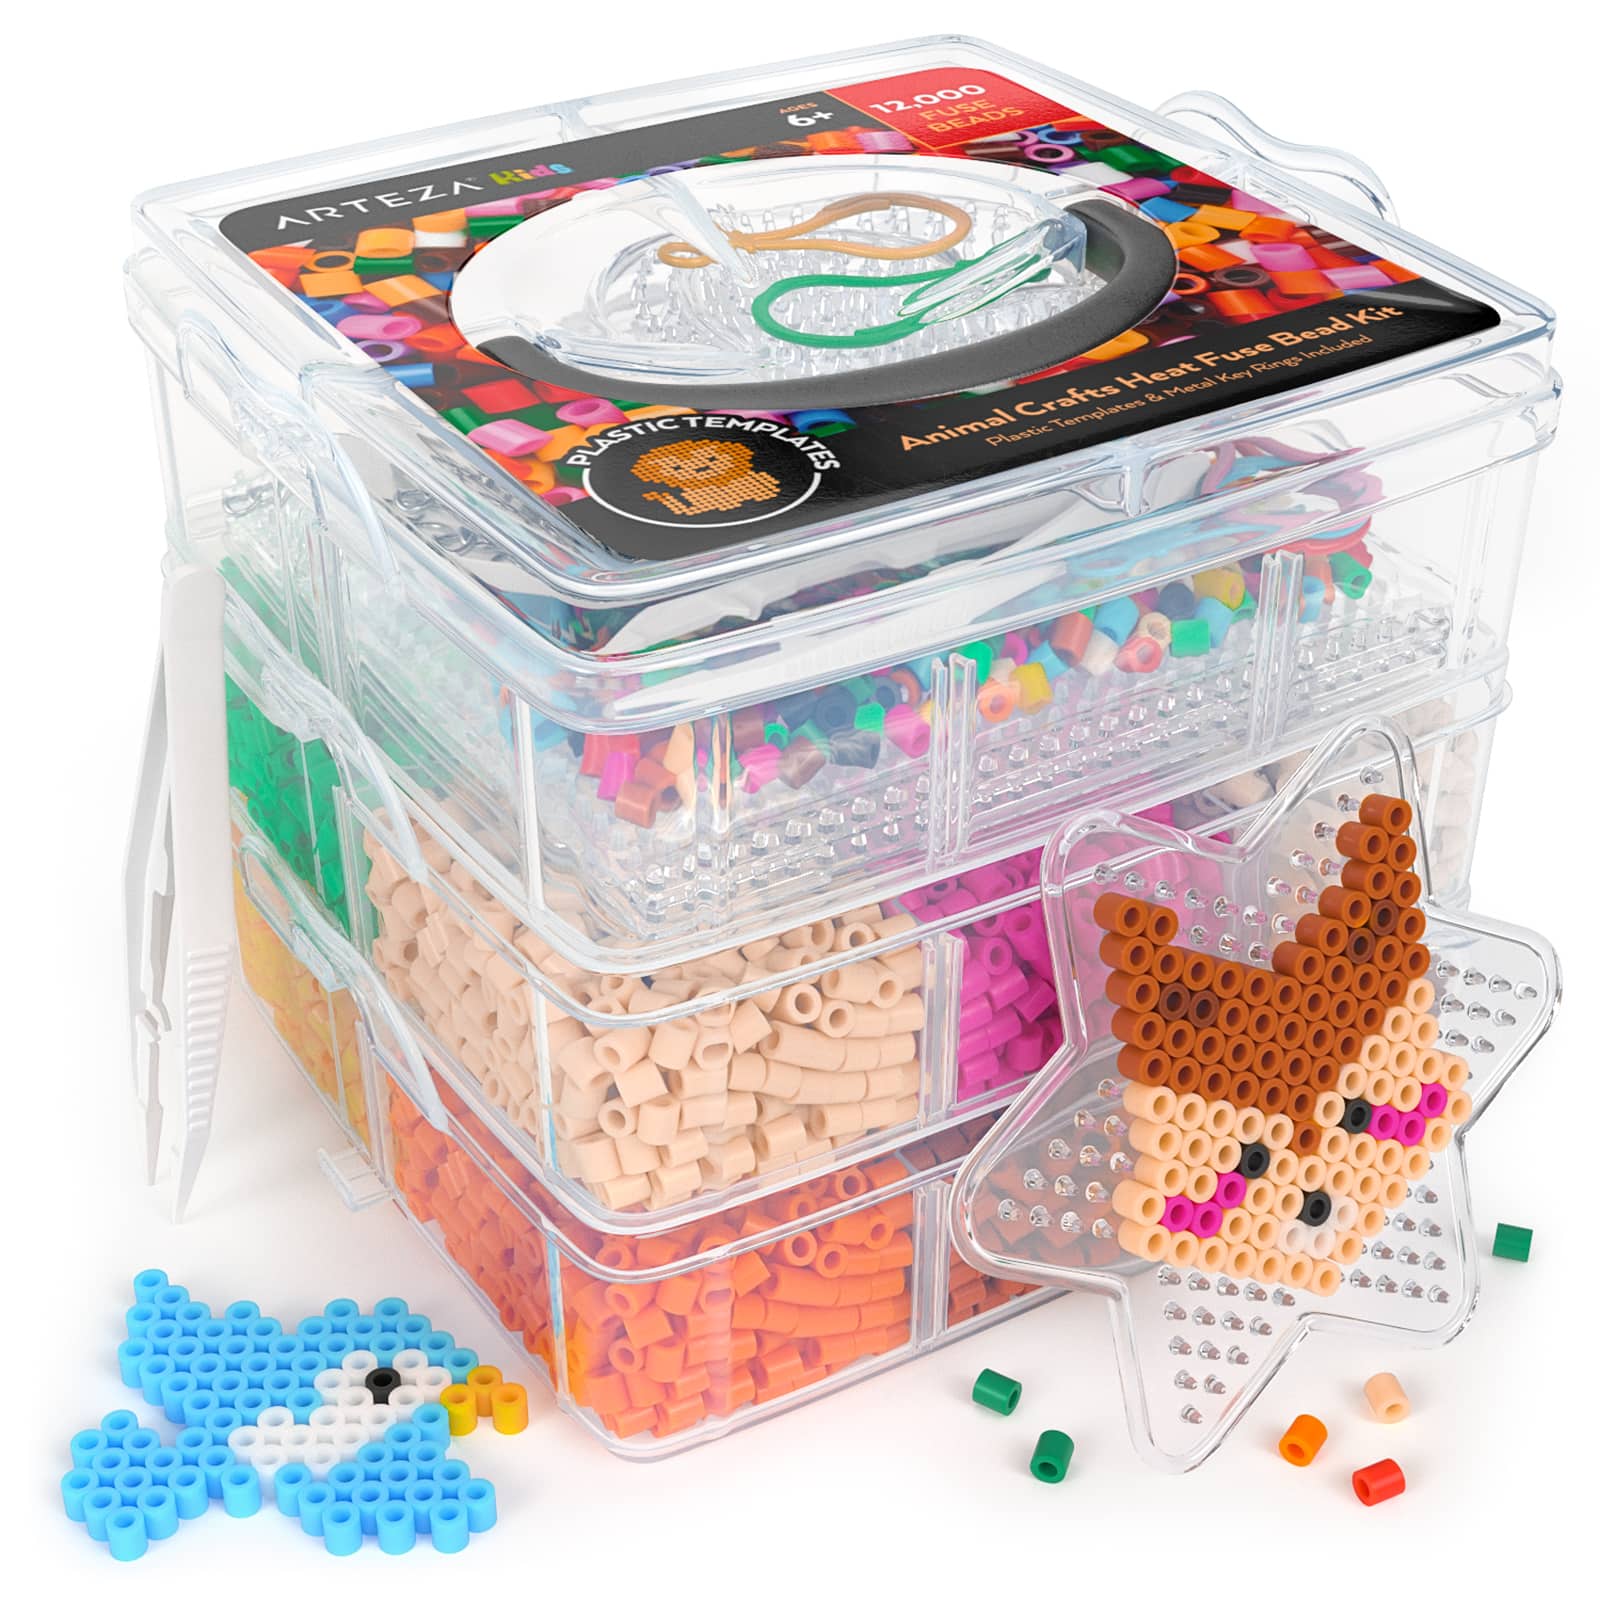 Arteza&#xAE; Kids Animal Crafts Heat Fuse Beads Kit